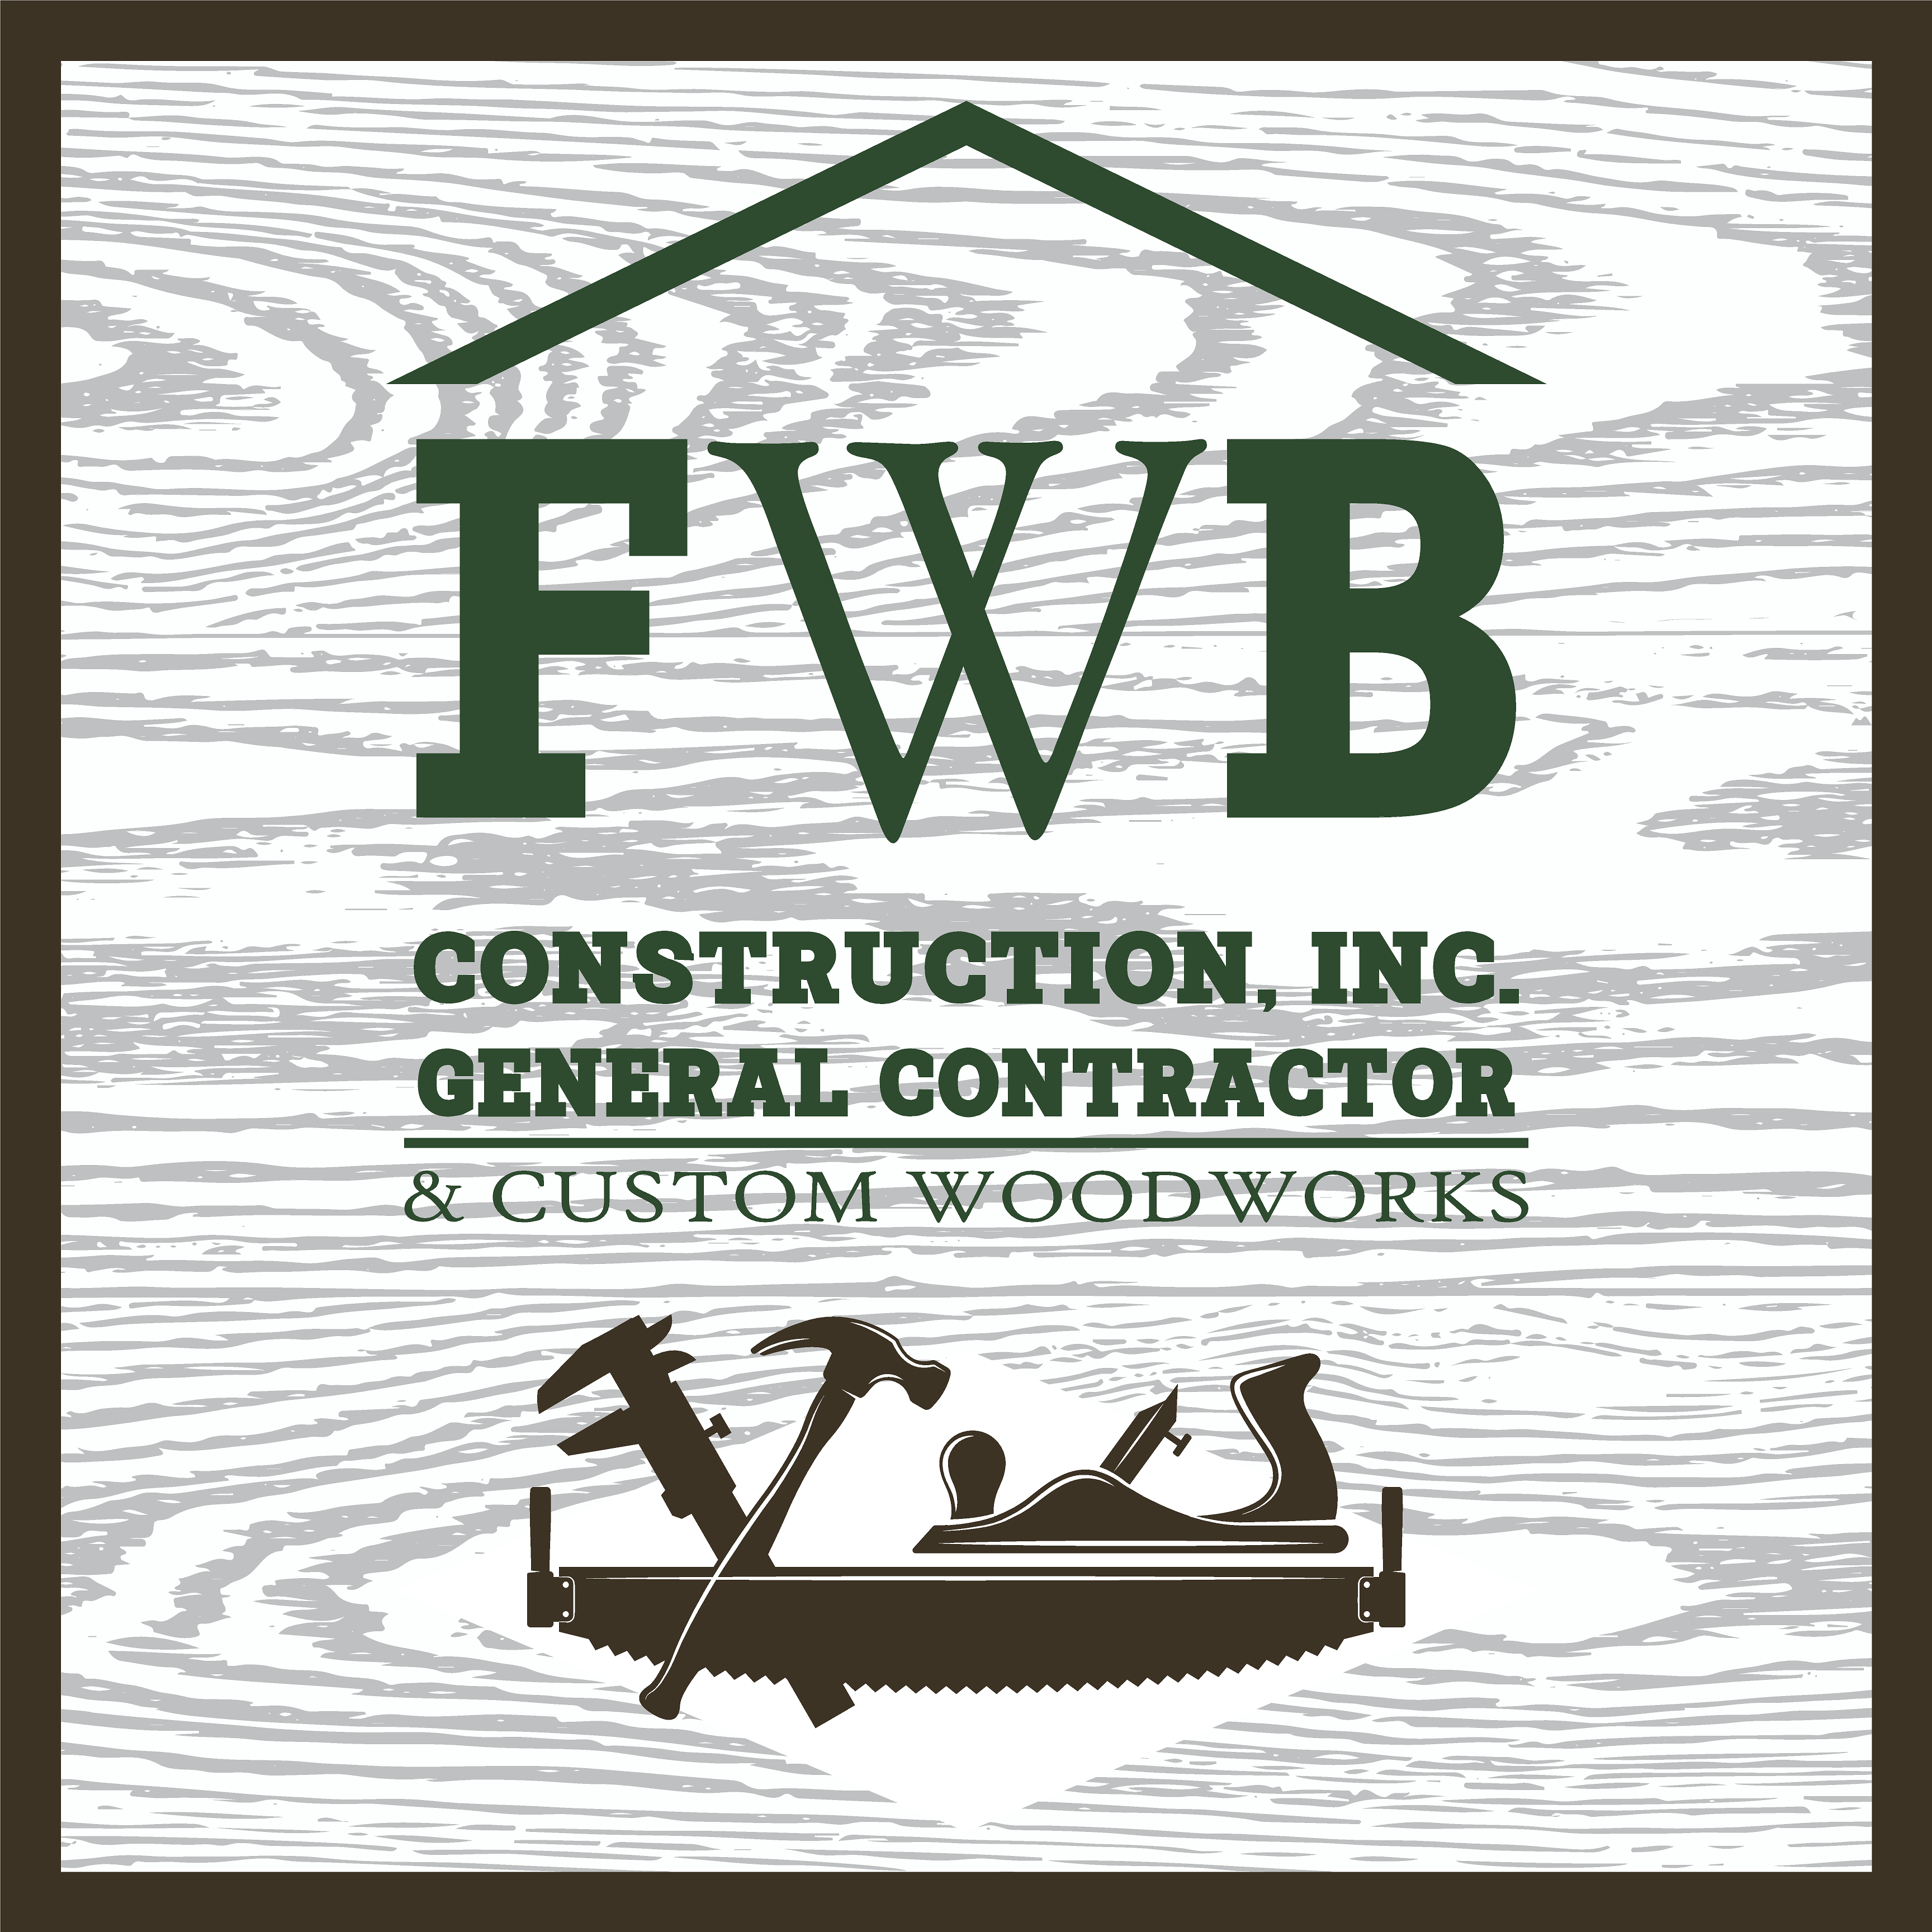 FWB Construction